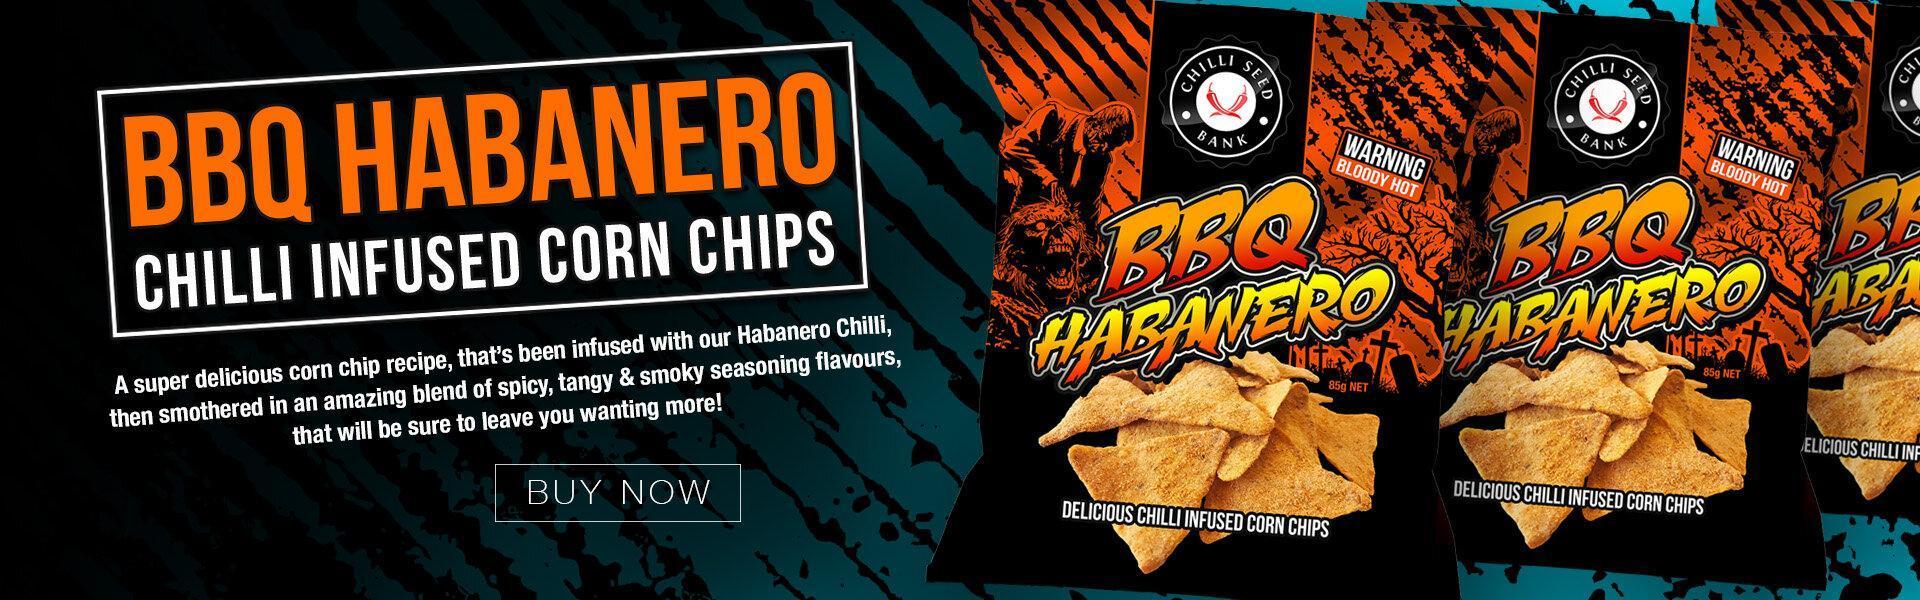 Buy BBQ Habanero Chips